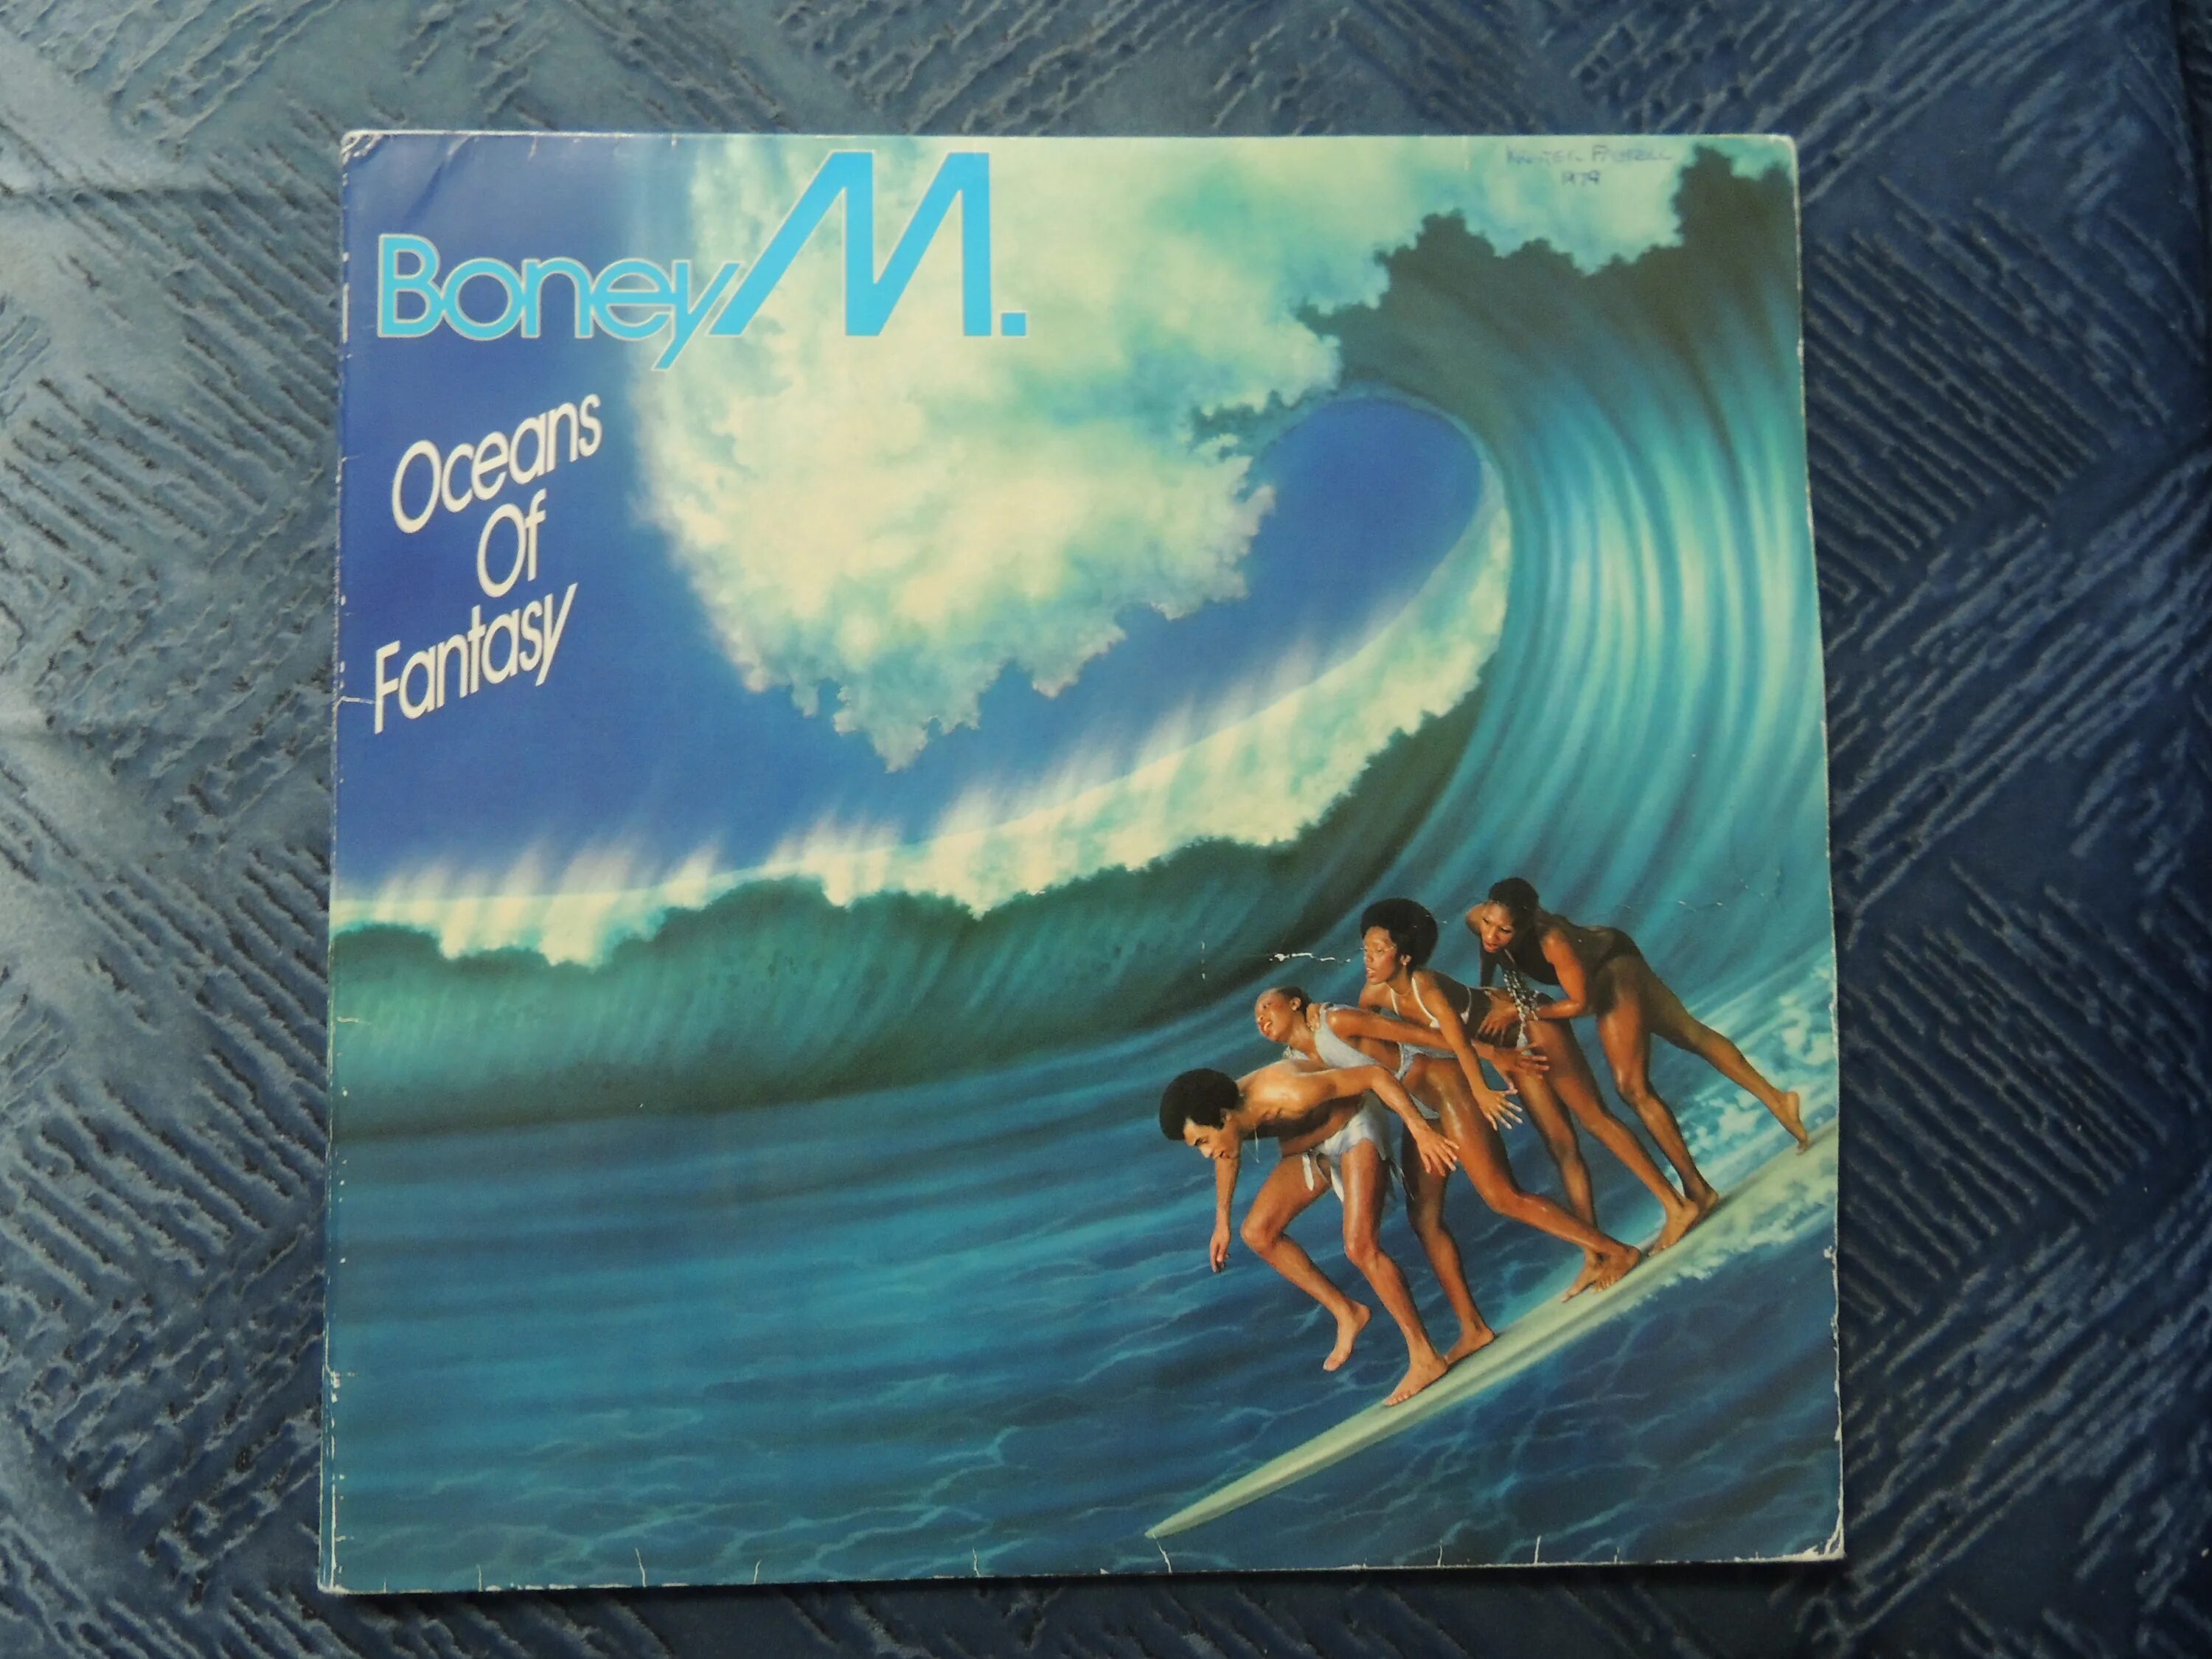 Boney m oceans. Boney m Oceans of Fantasy 1979 пластинка. Boney m Oceans of Fantasy 1979 LP. Альбомы Boney m - (Oceans of Fantasy) - 1979г. Boney m Oceans of Fantasy обложка.